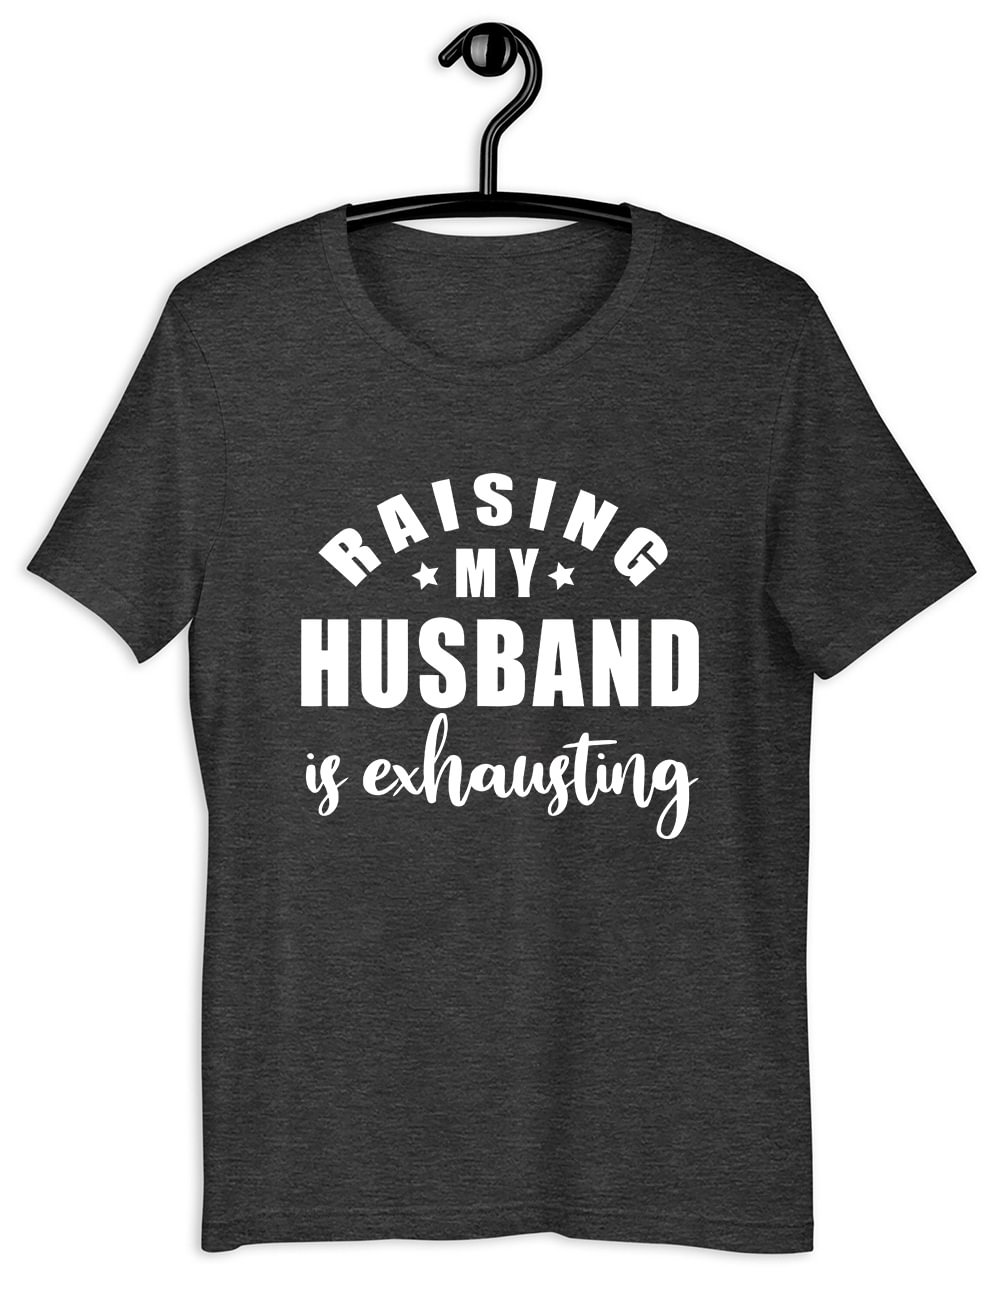 Raising My Husband Is Exhausting T-Shirt